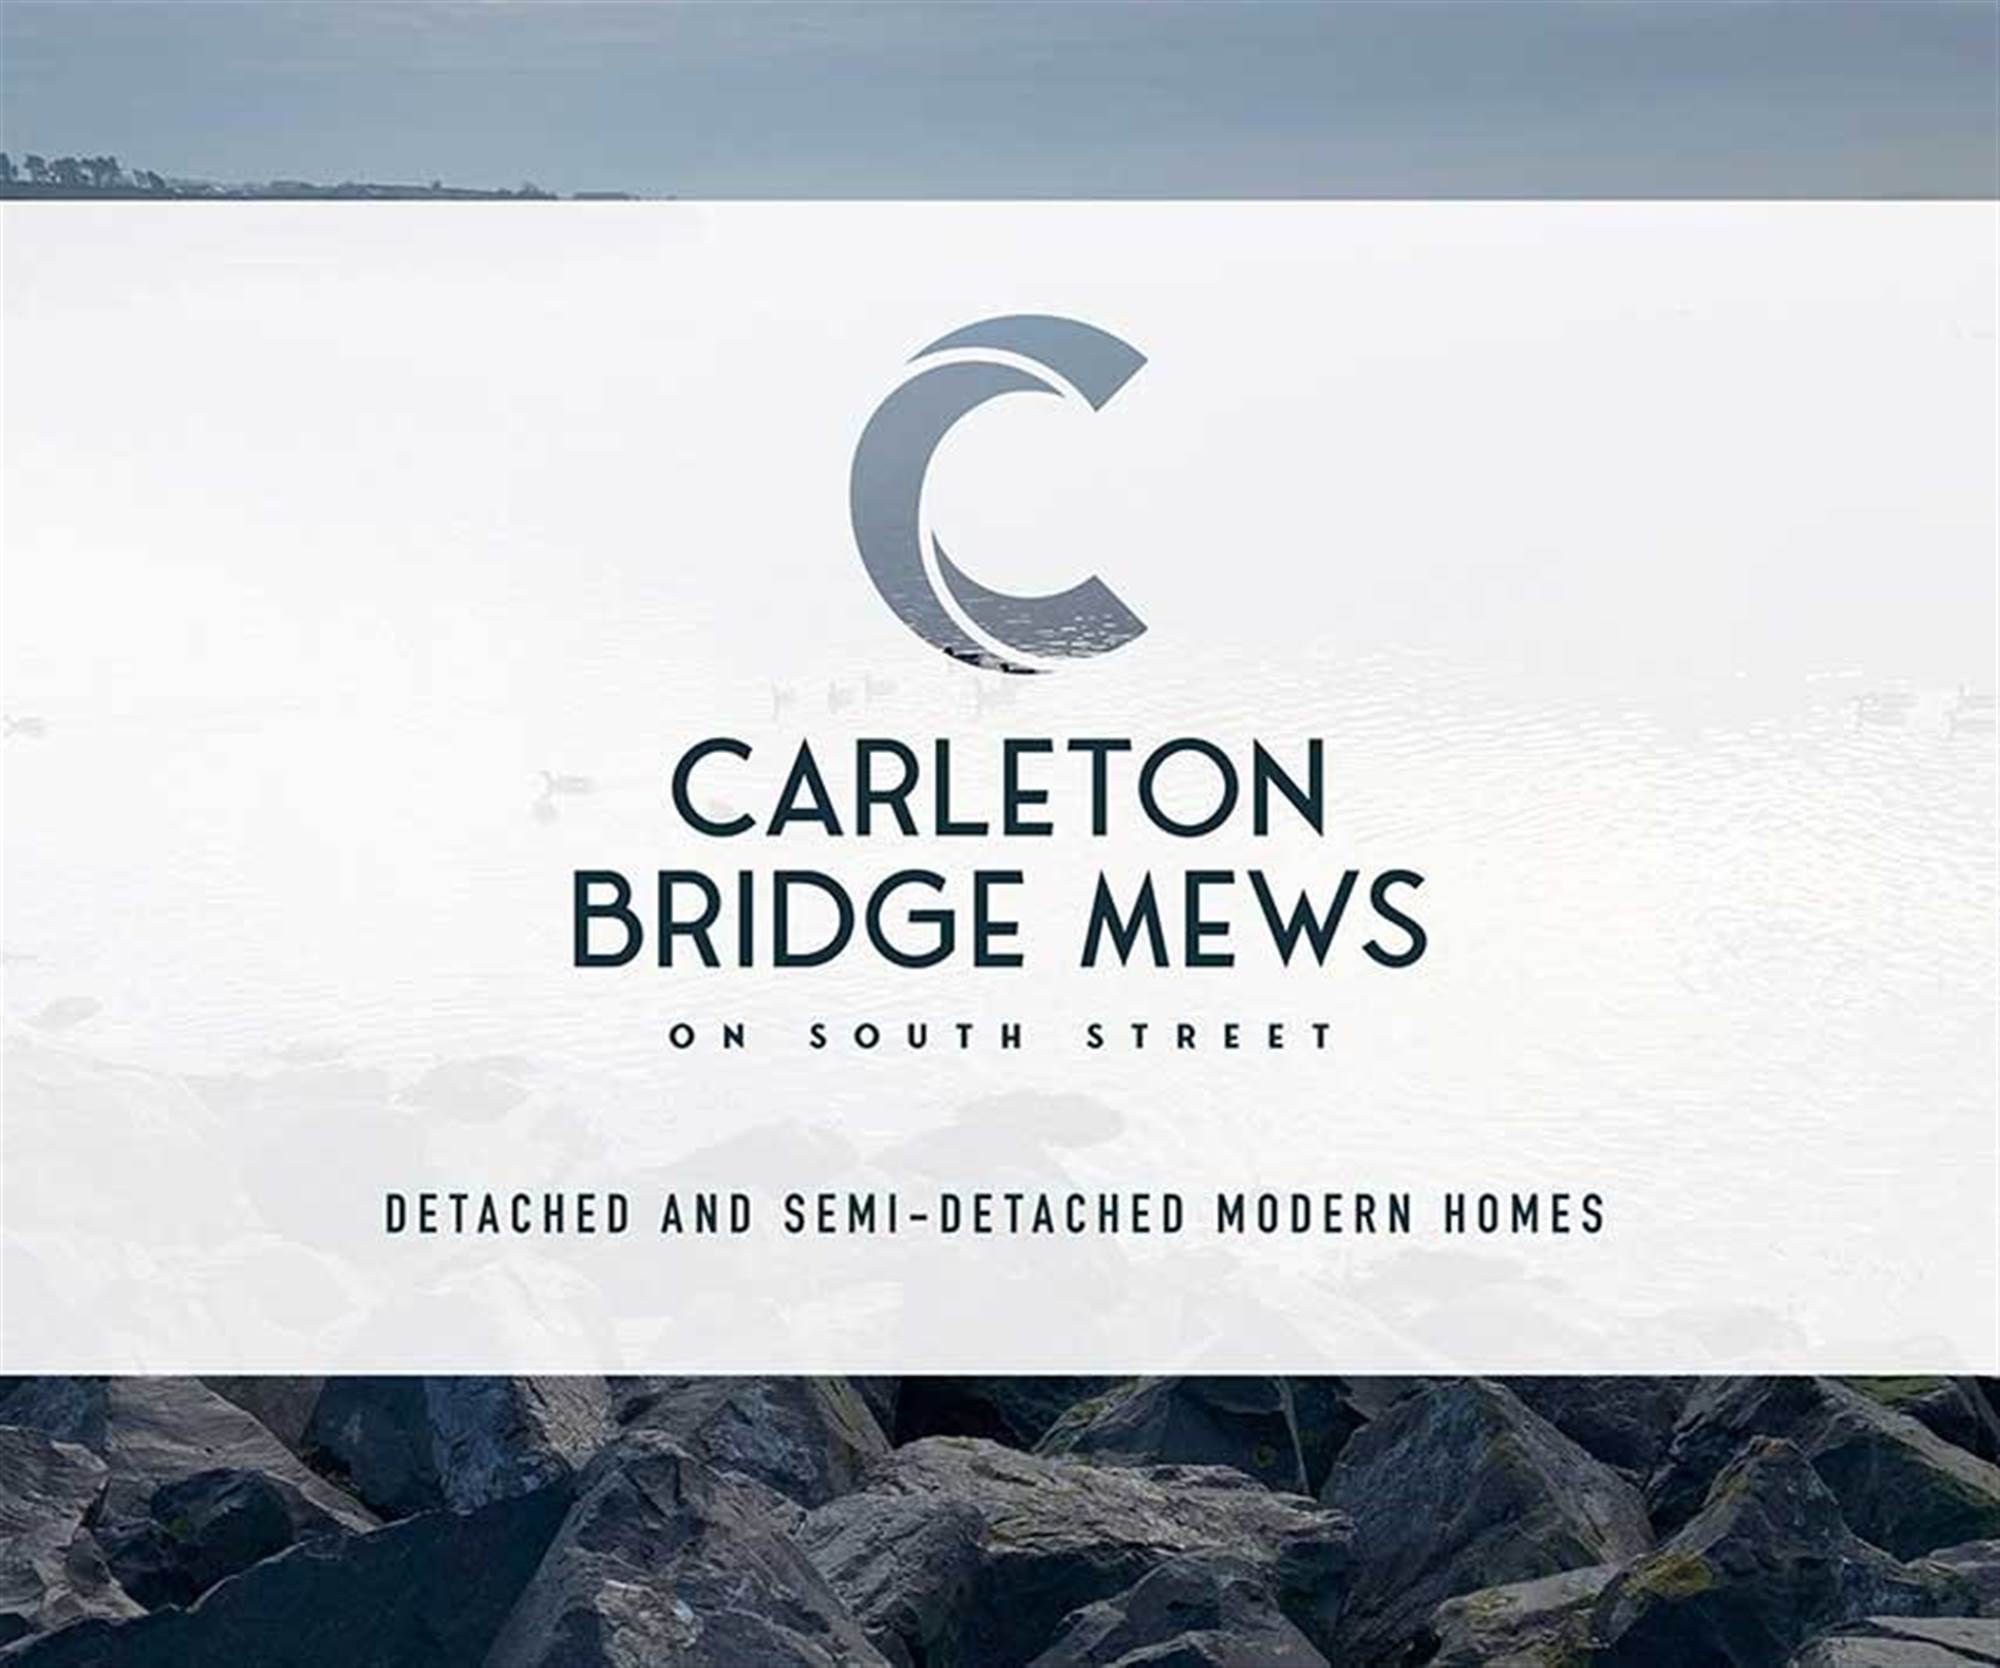 41 Carleton Bridge Mews